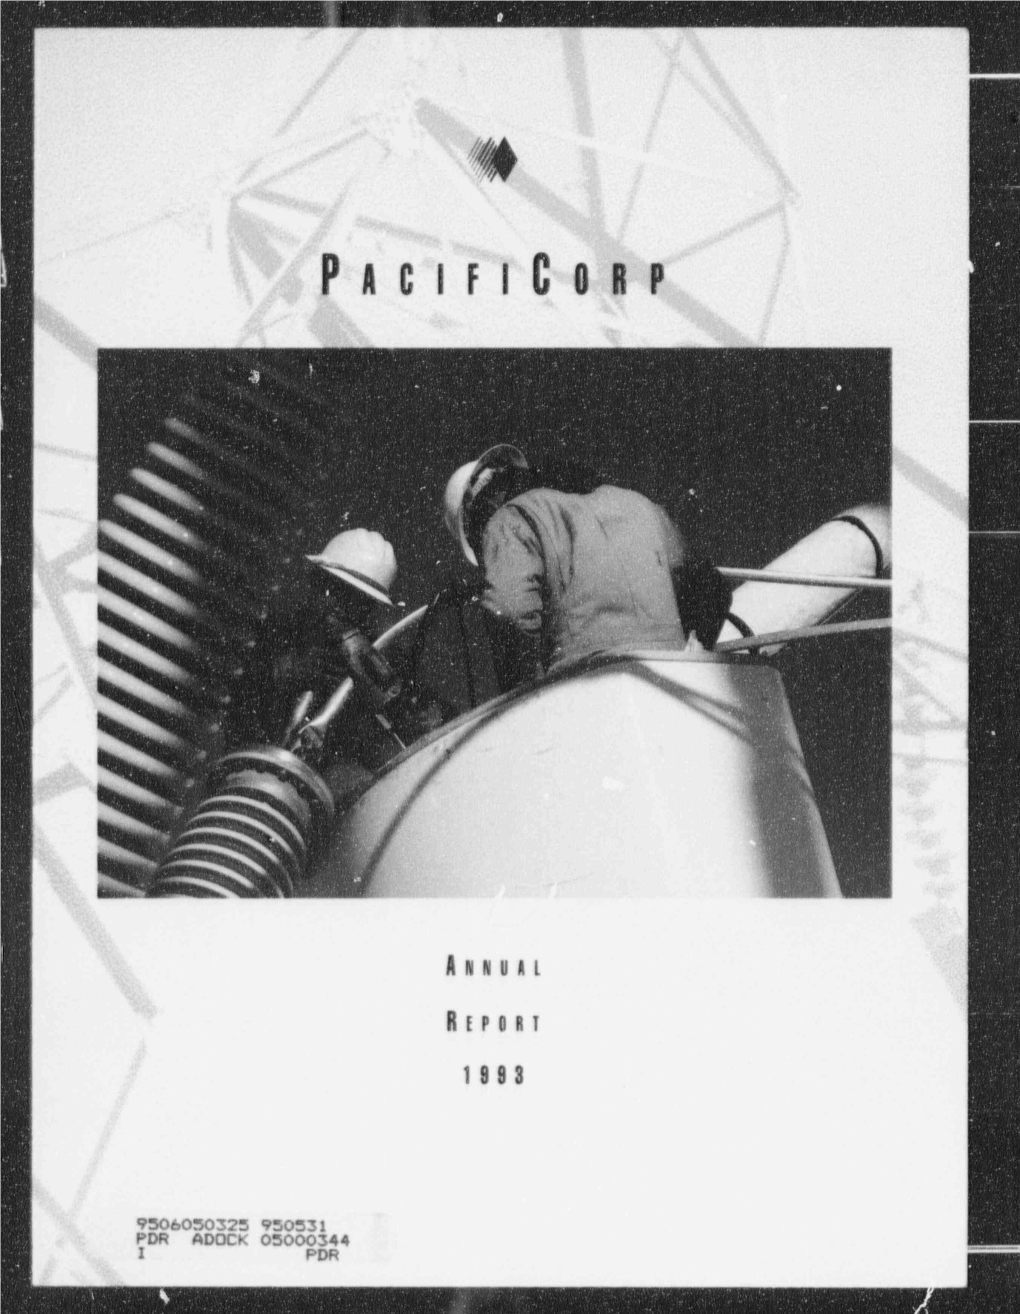 "Pacificorp Annual Rept 1993."